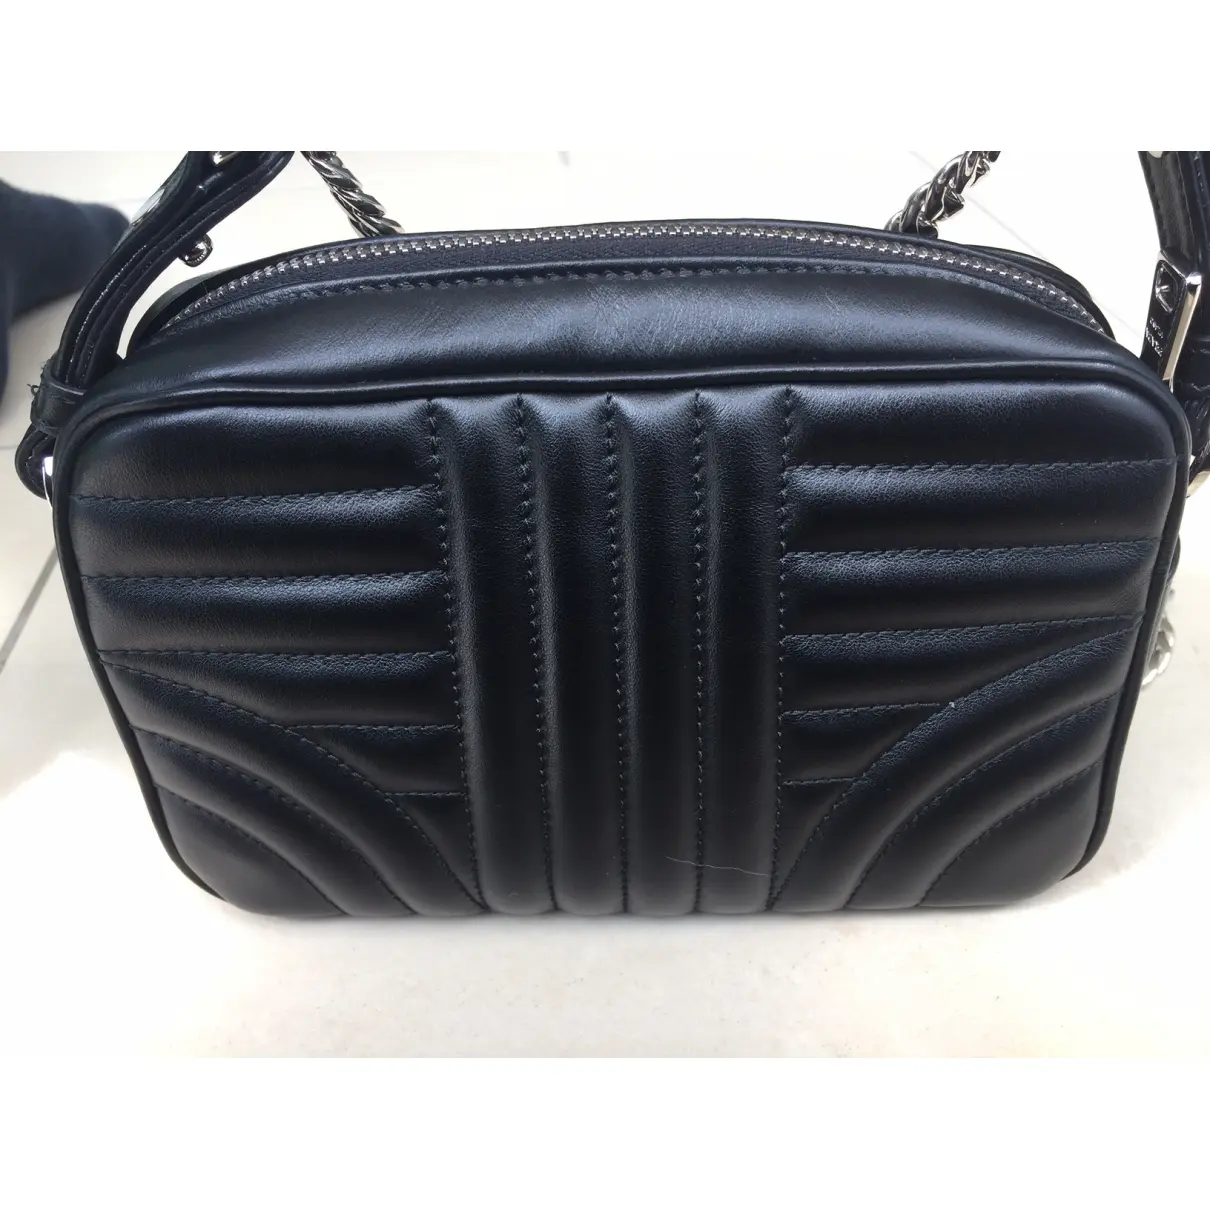 Buy Prada Diagramme leather crossbody bag online